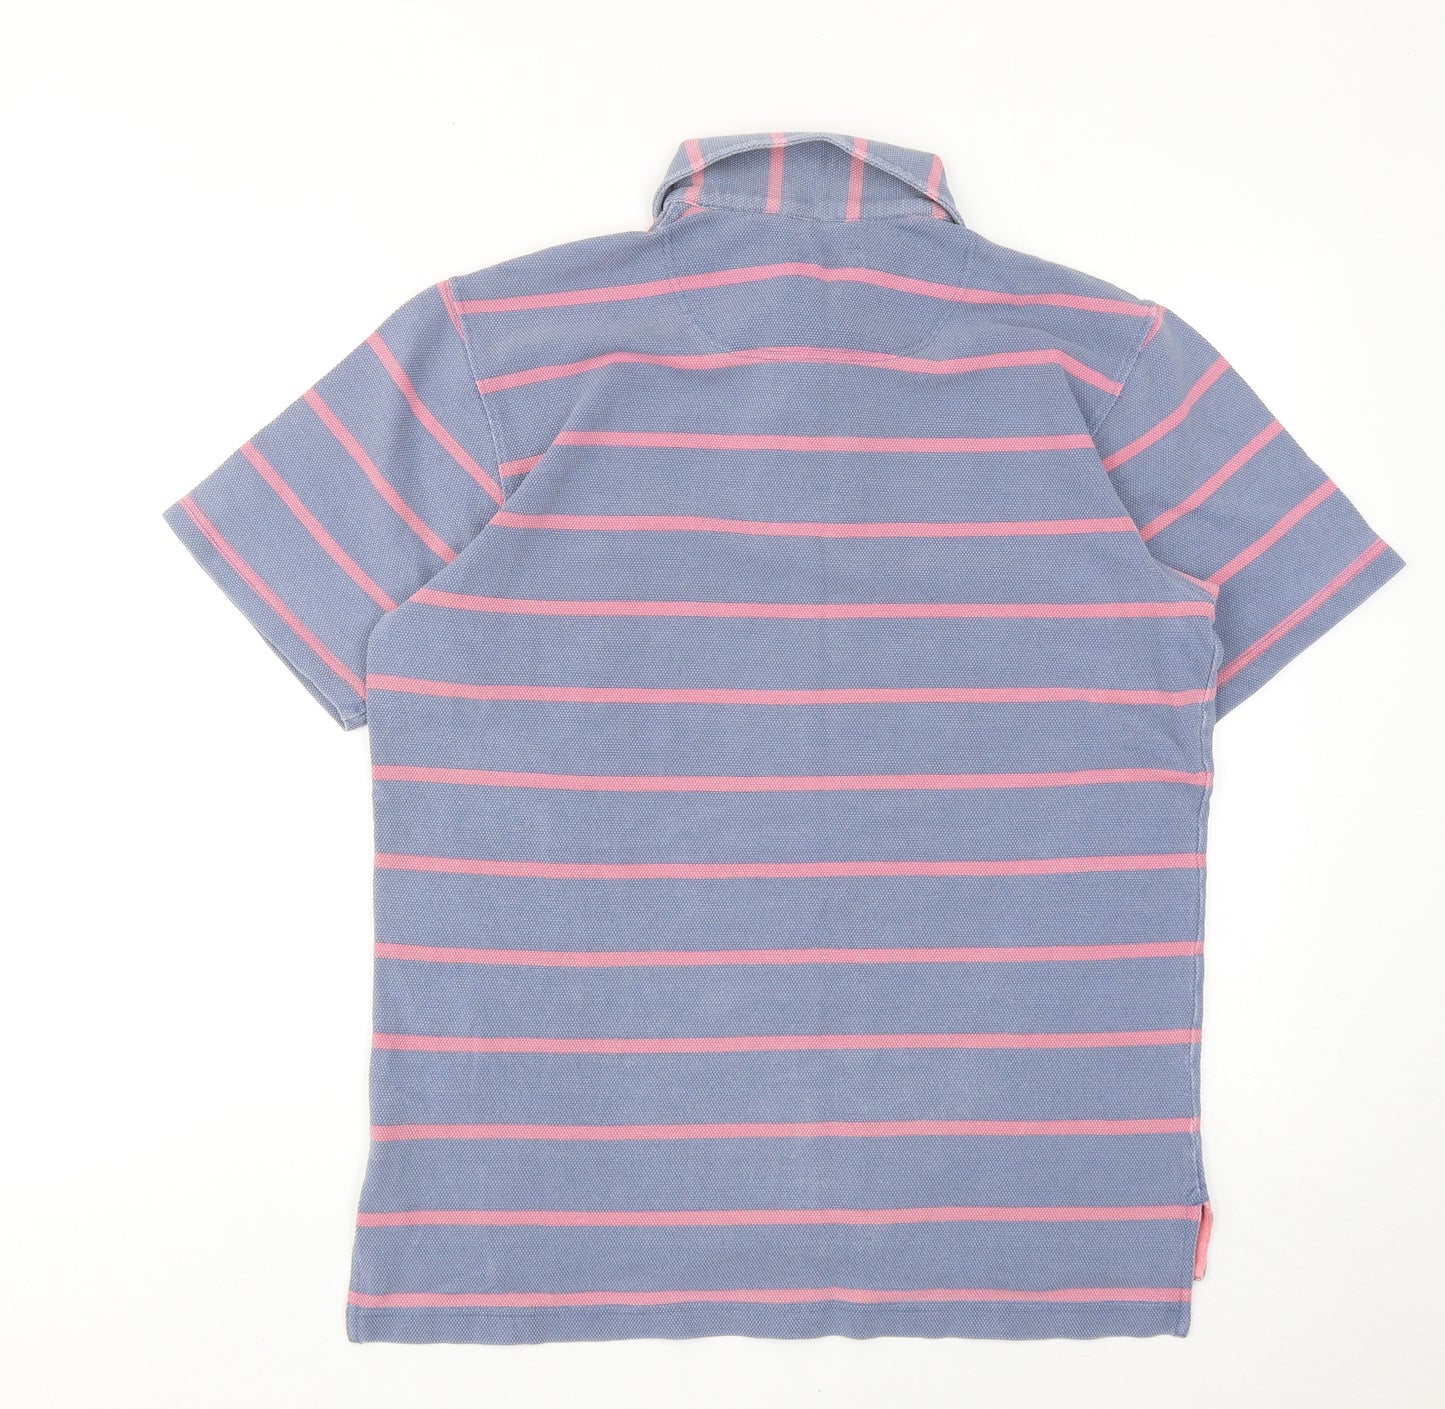 Boden Mens Blue Striped Cotton Polo Size M Collared Button